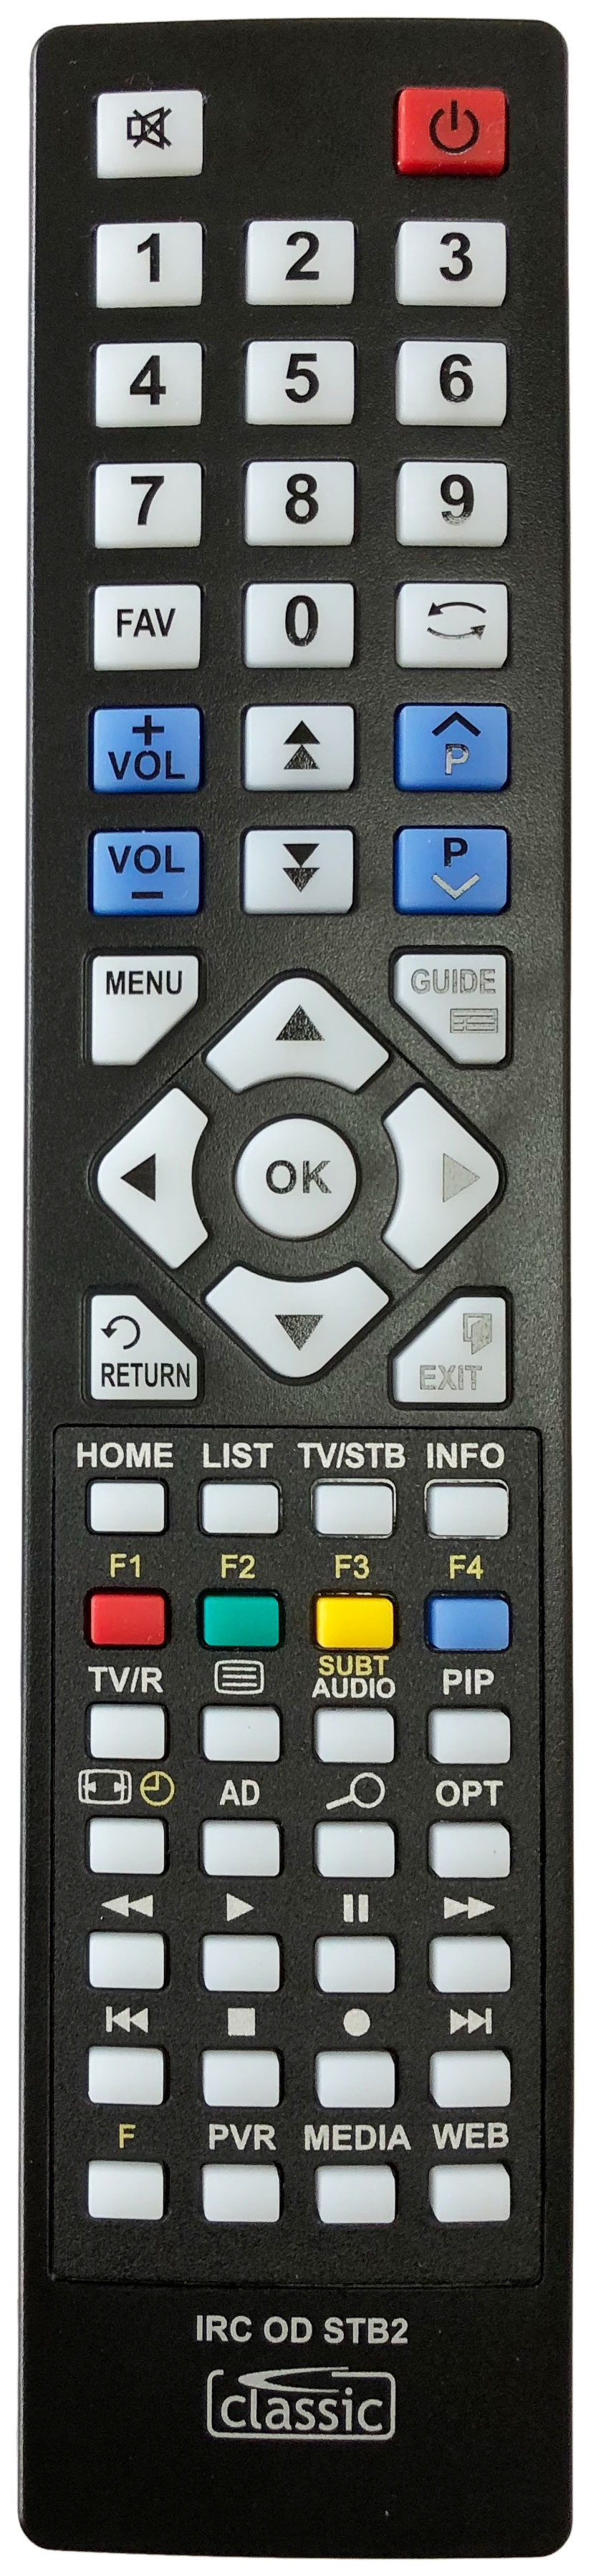 Humax RT-525 Remote Control